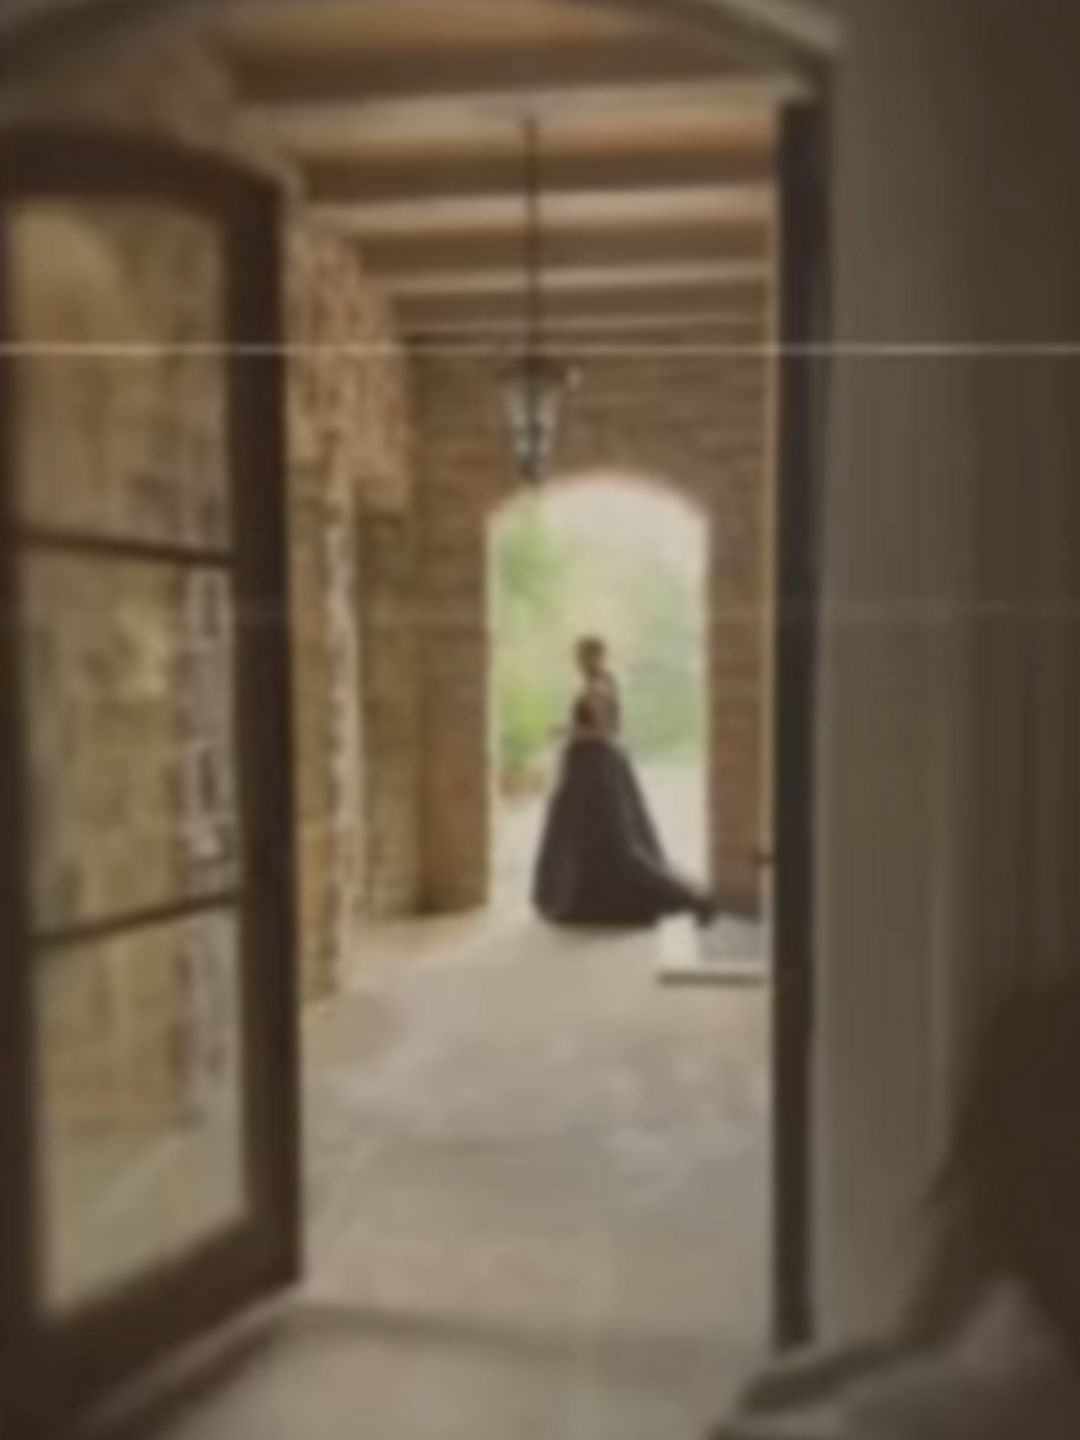 Meghan Markle was seen in her hallway in the video